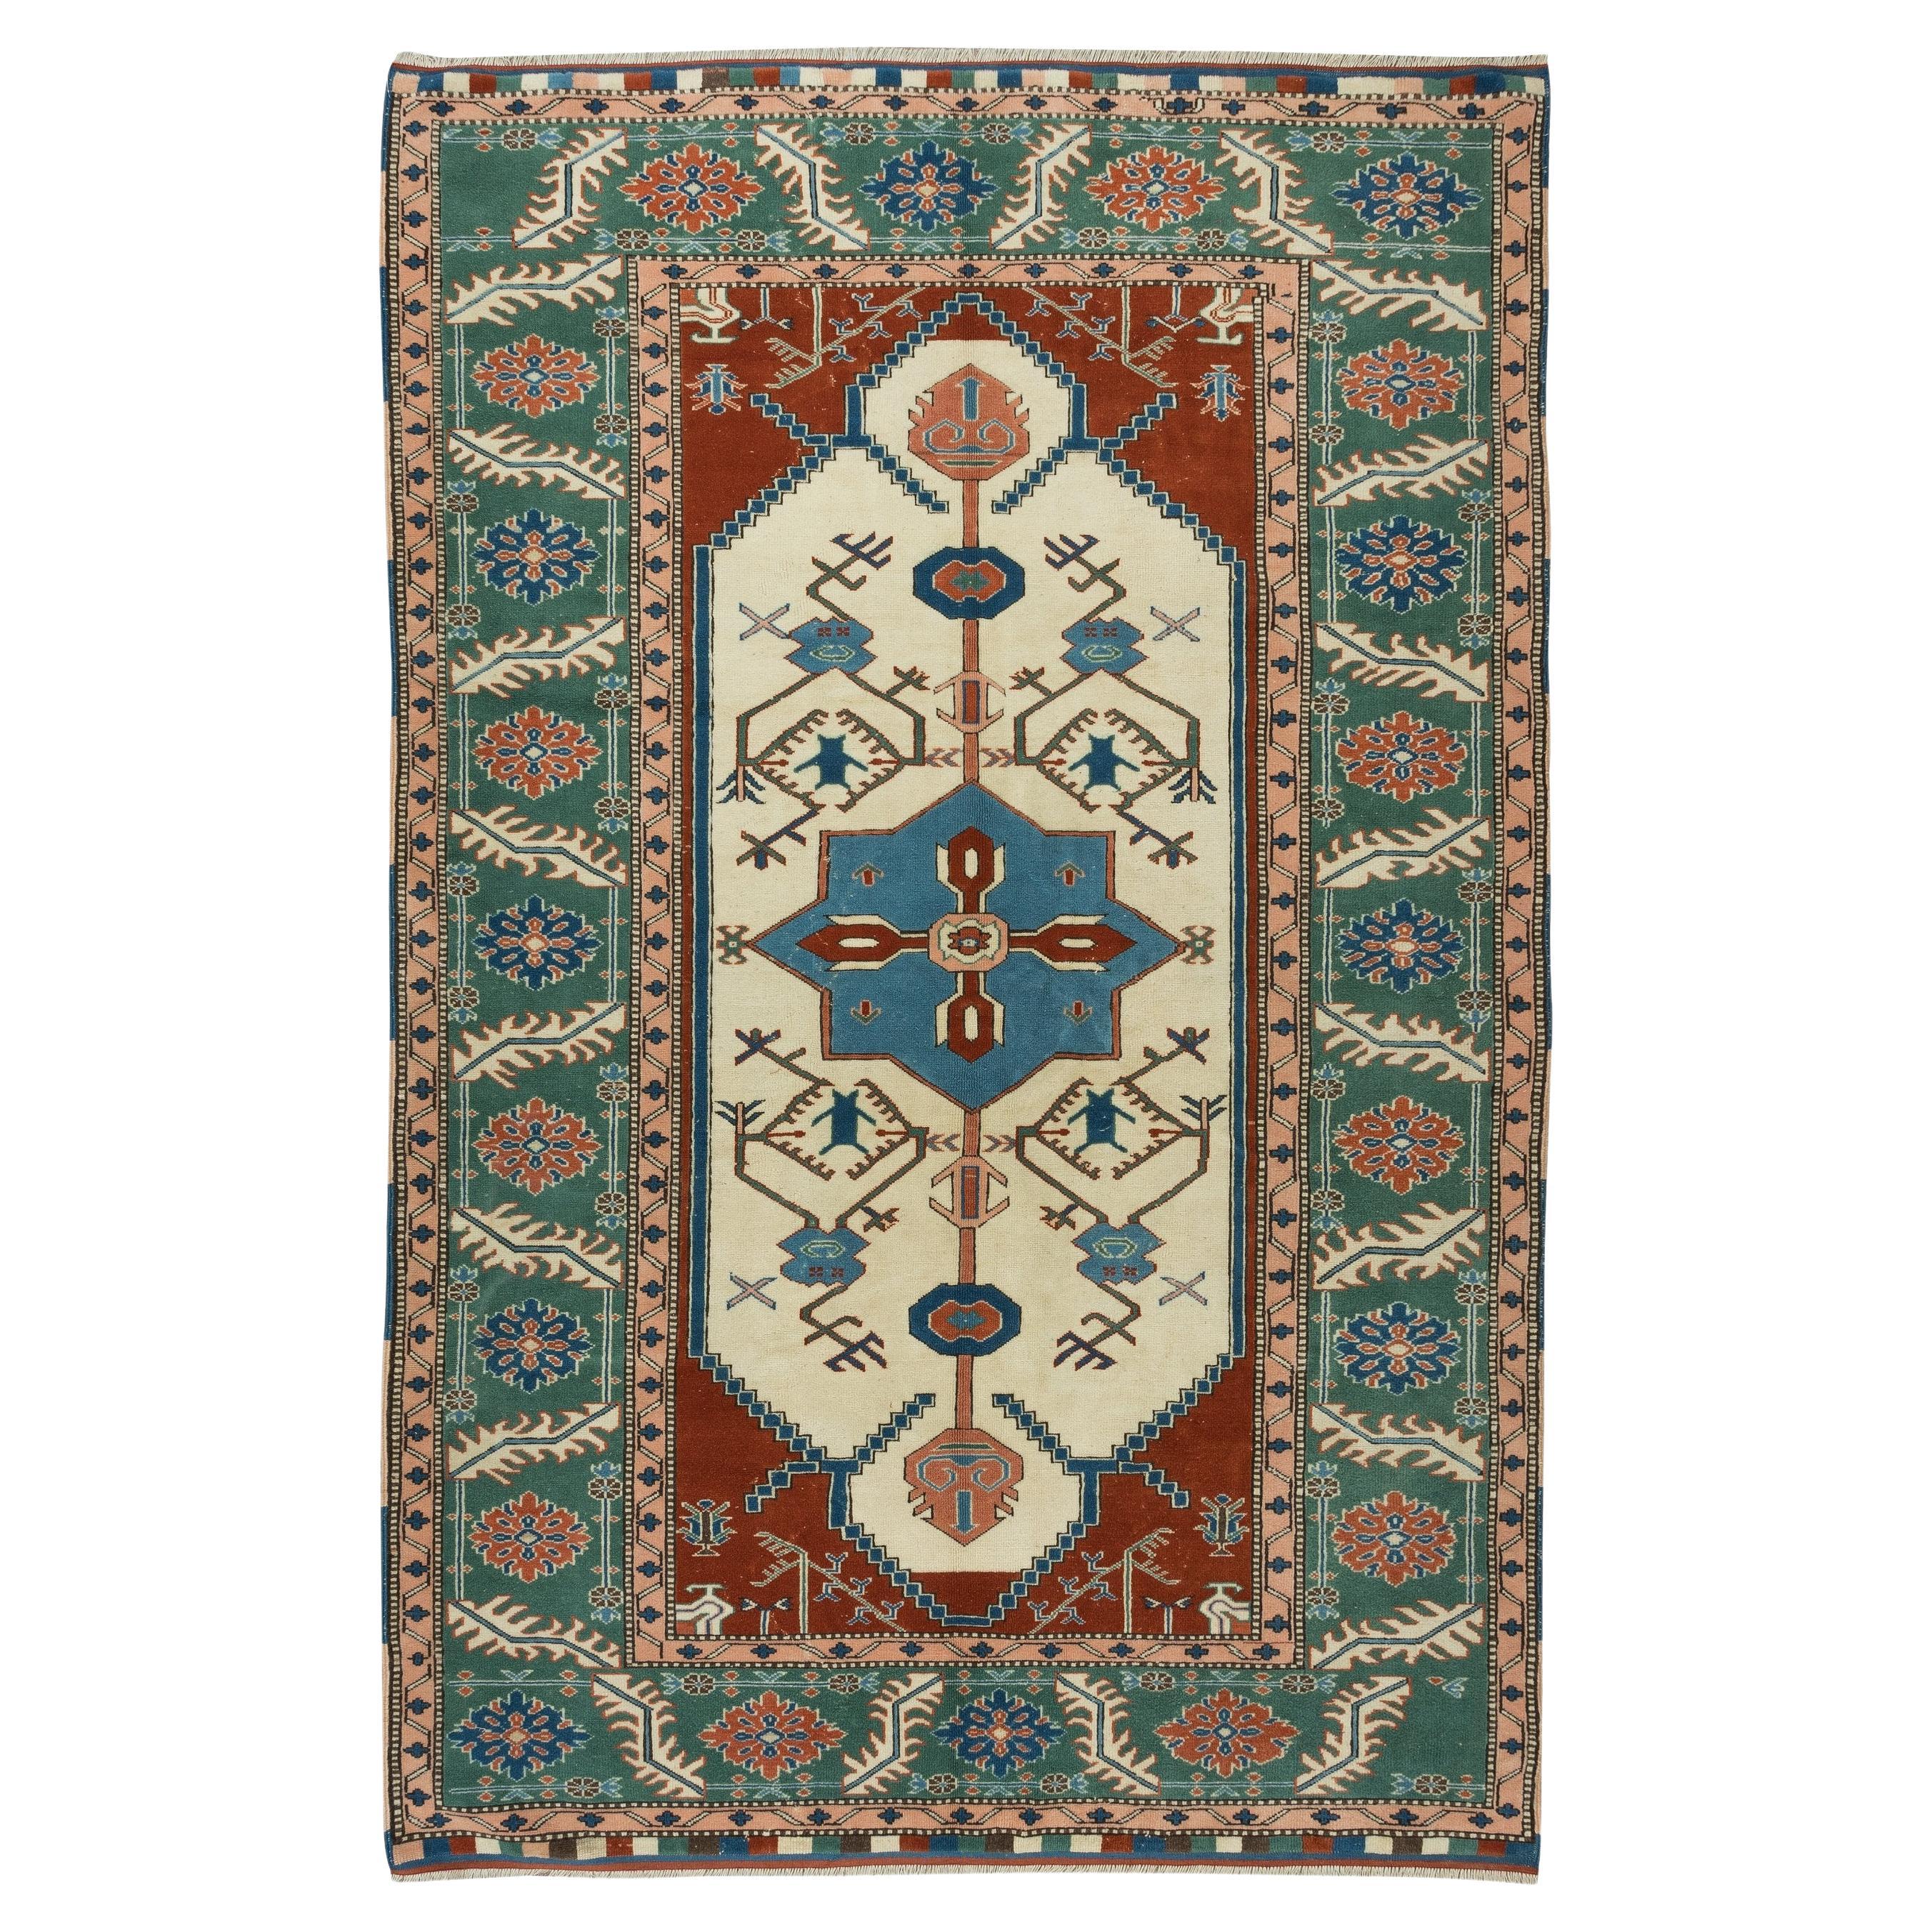 5.6x8.9 Ft Vintage Geometric Design Wool Rug, Authentic Handmade Turkish Carpet